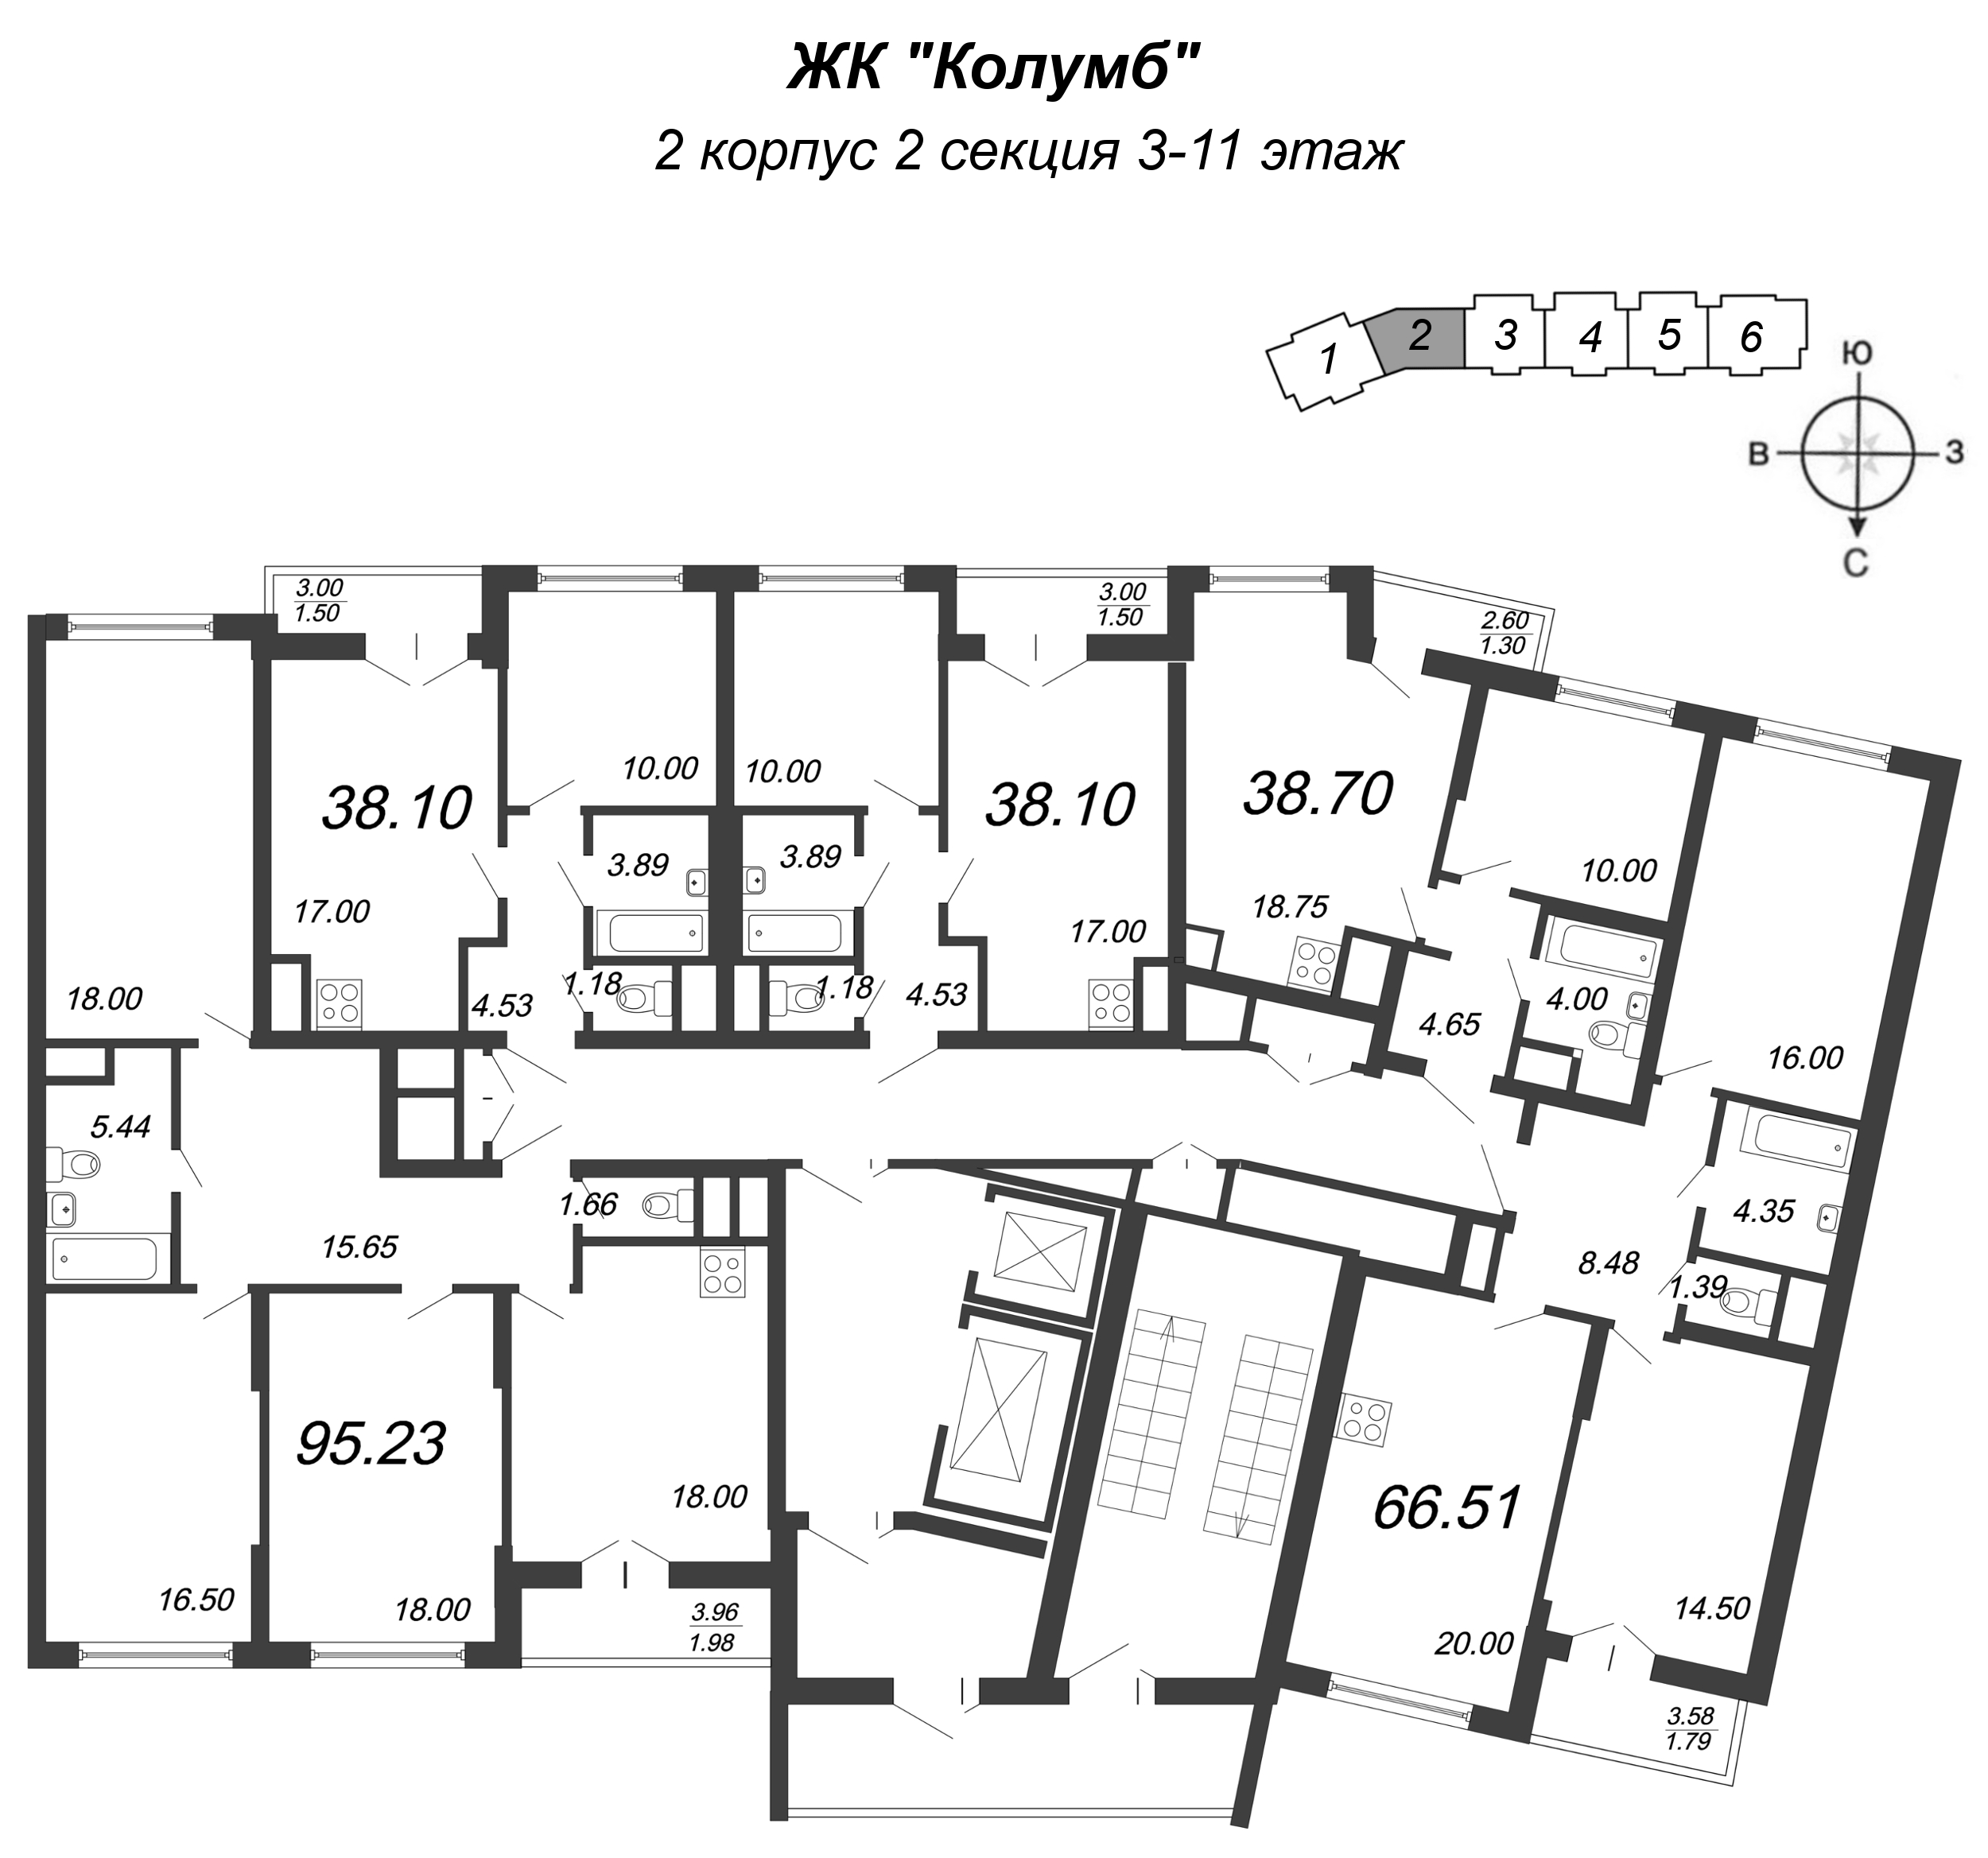 4-комнатная (Евро) квартира, 96.6 м² - планировка этажа